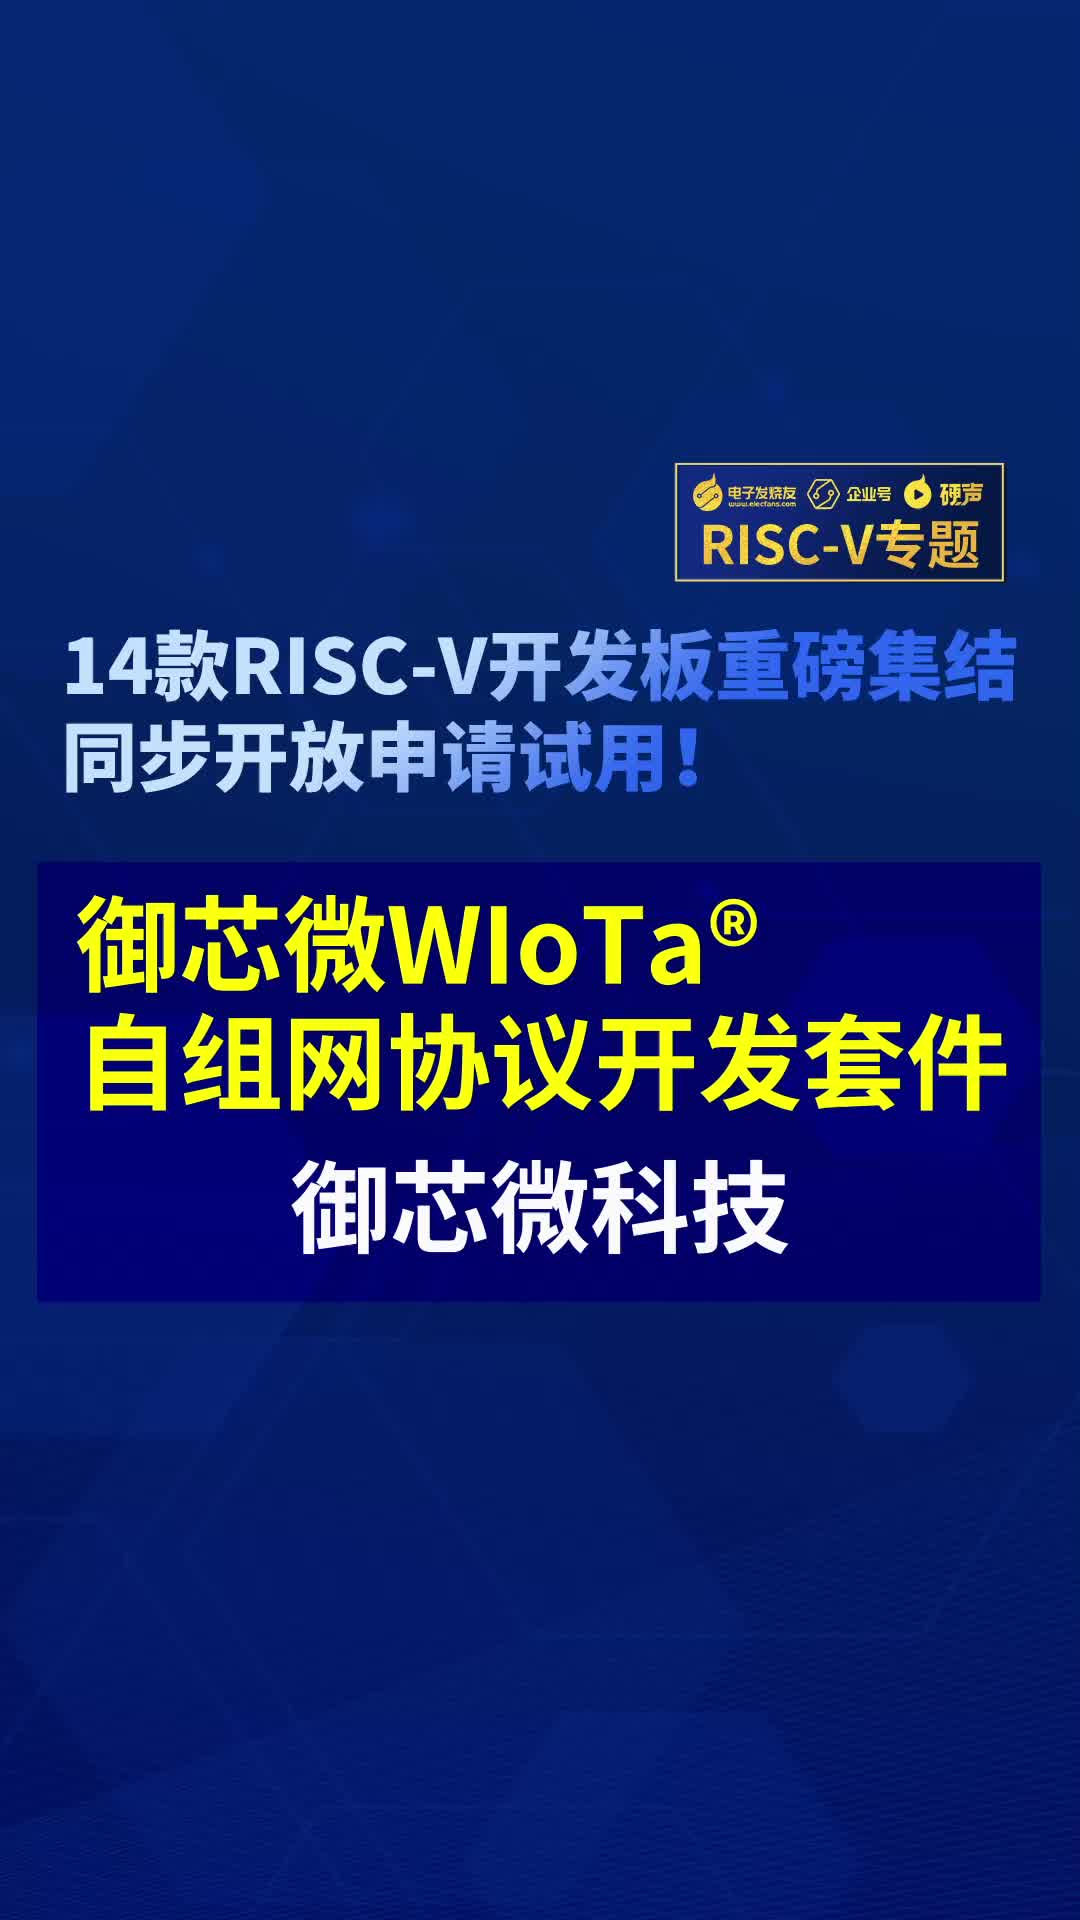 【RISC-V专题】御芯微WIoTa自组网协议开发套件首发试用#RISC-V开发板评测 